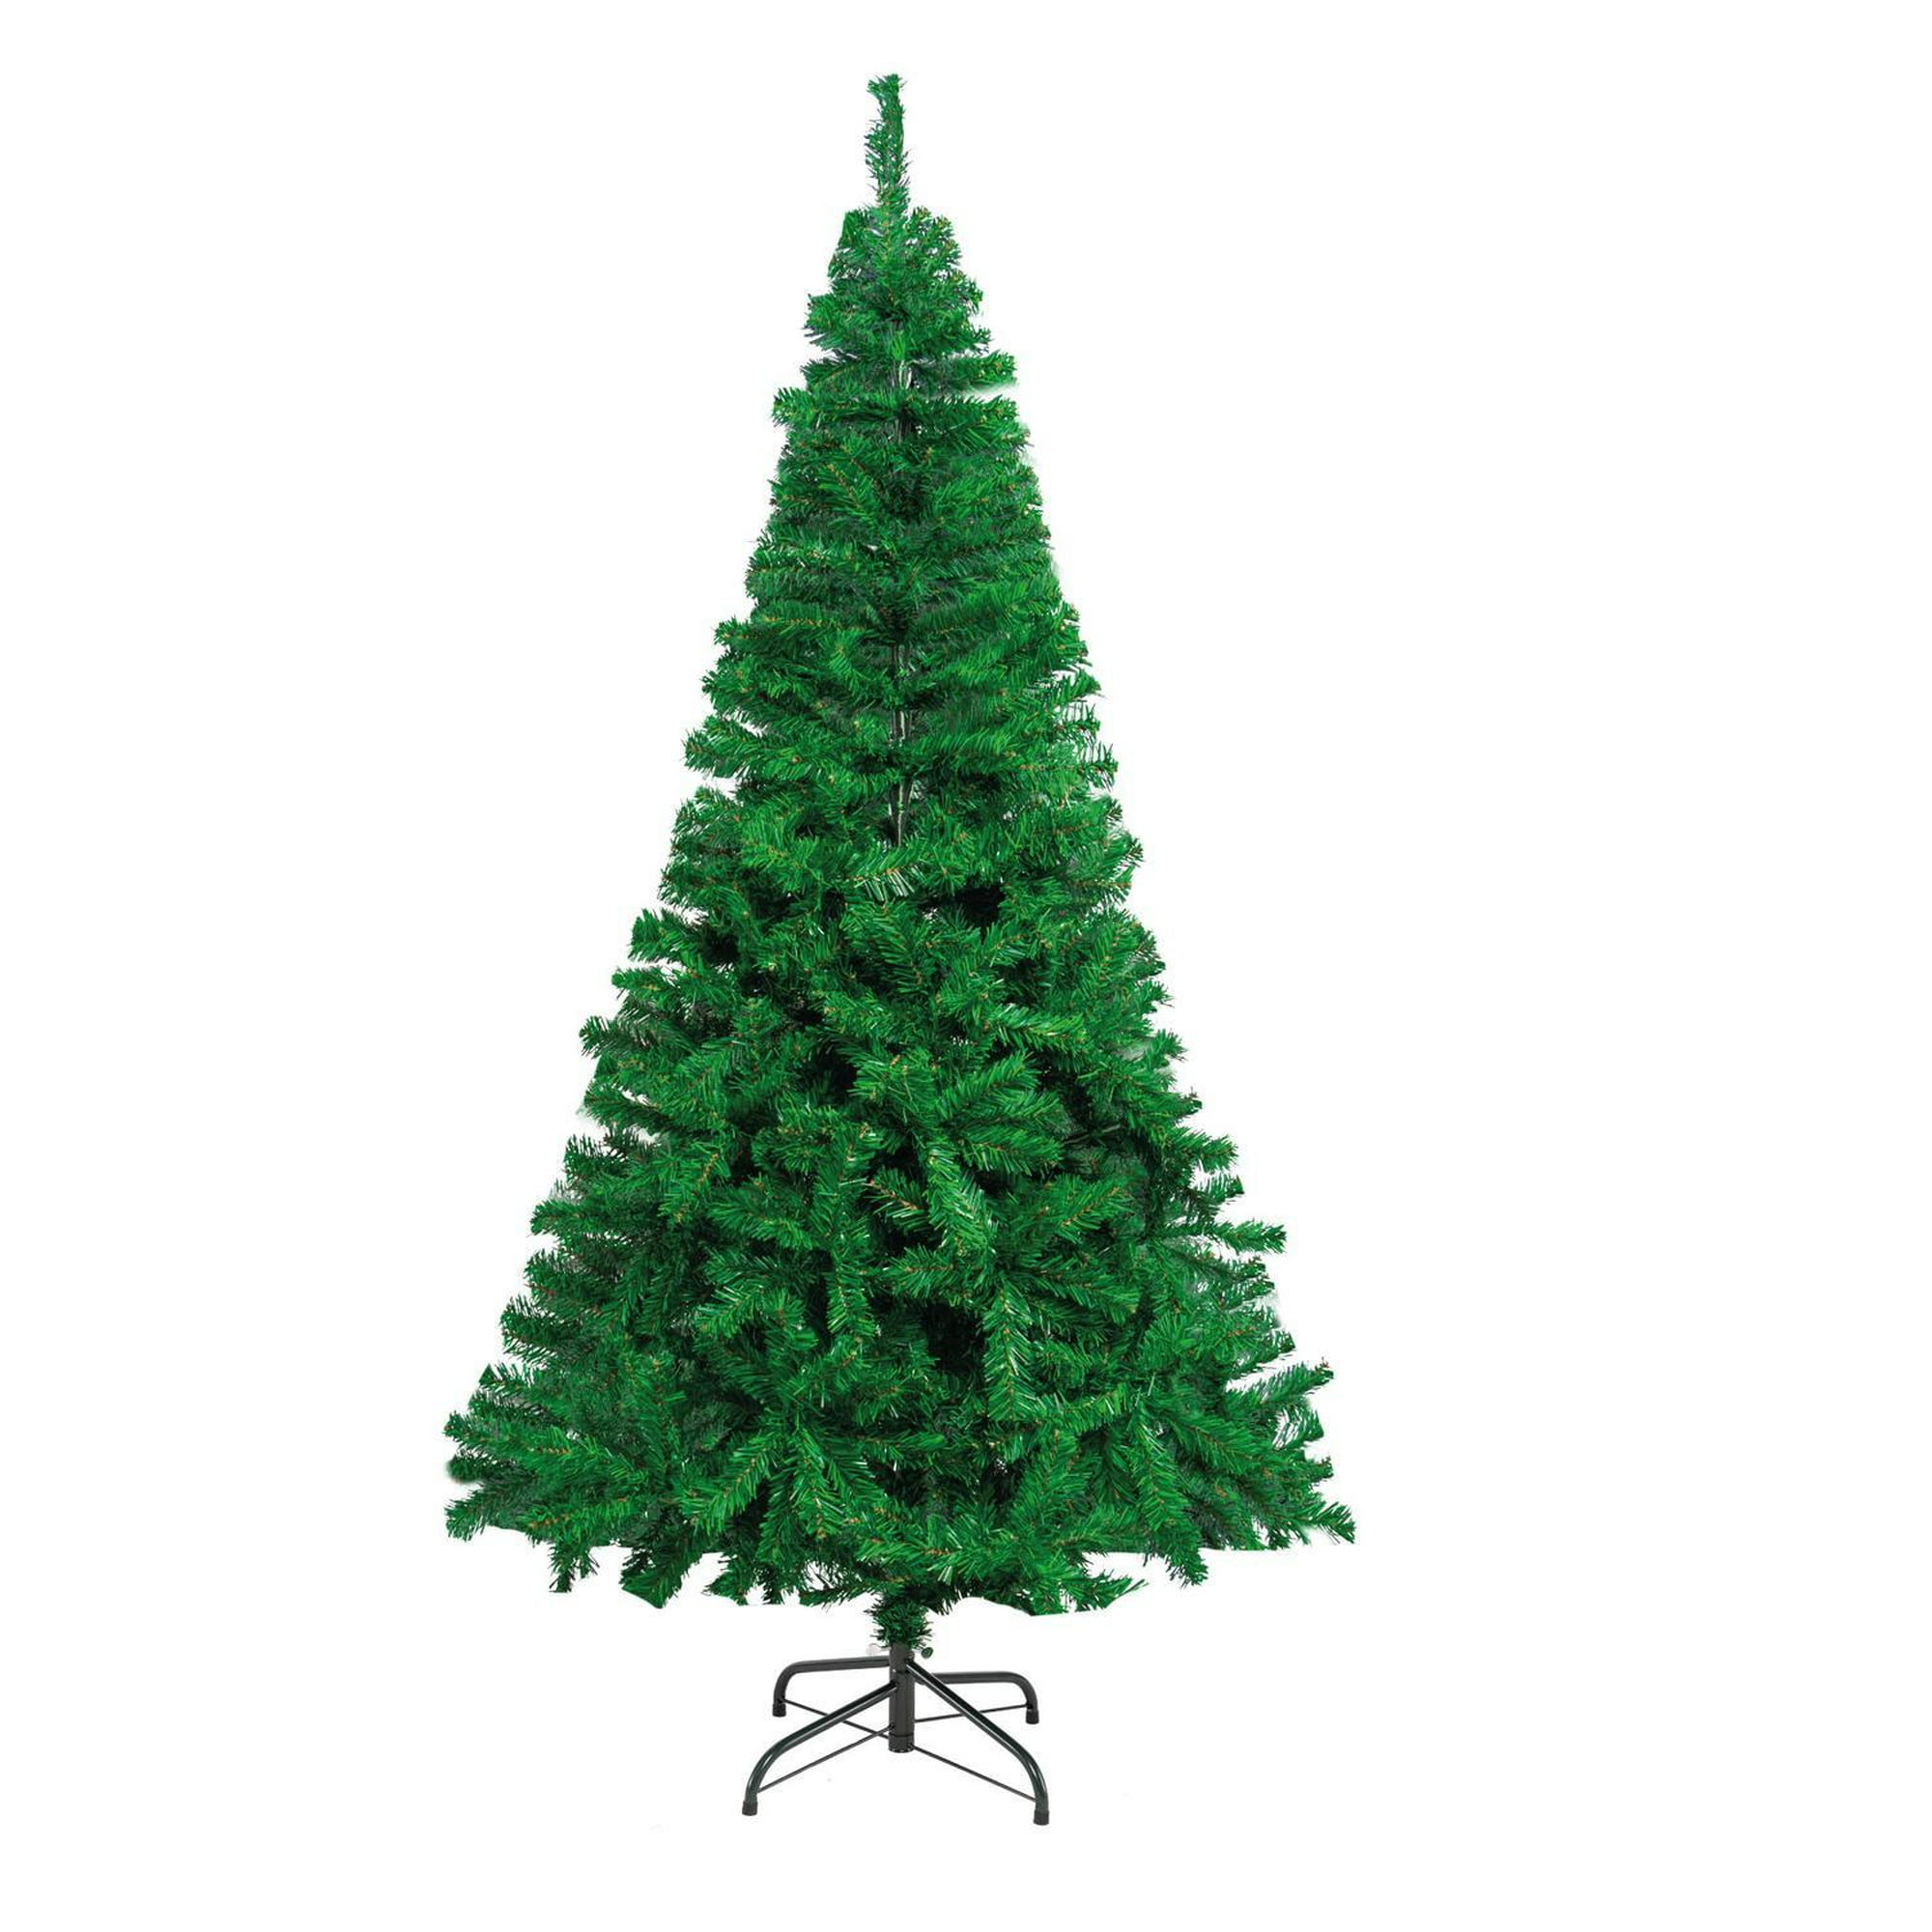 Arbol de navidad pino artificial 2.10m frondoso follaje sky green hjan21050001